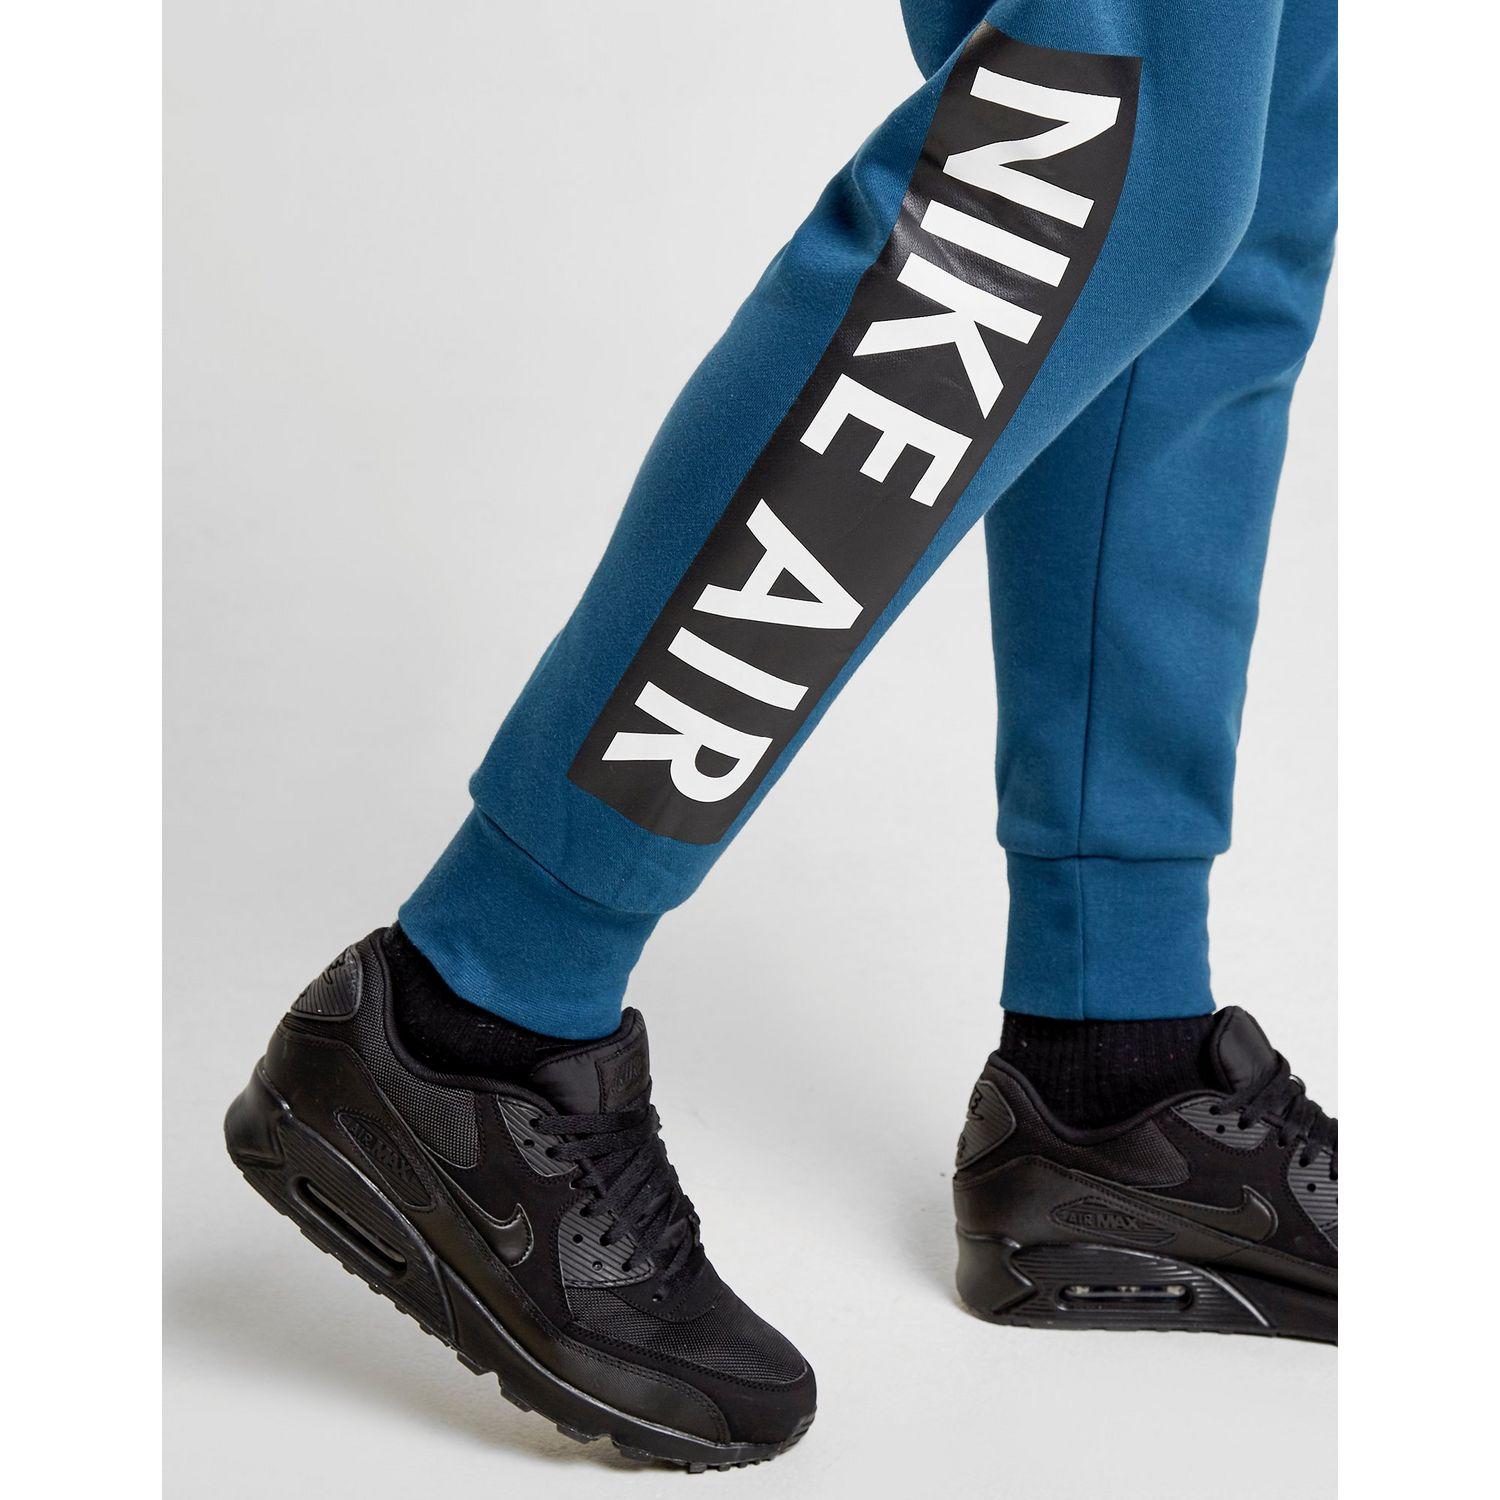 nike air leg logo track pants